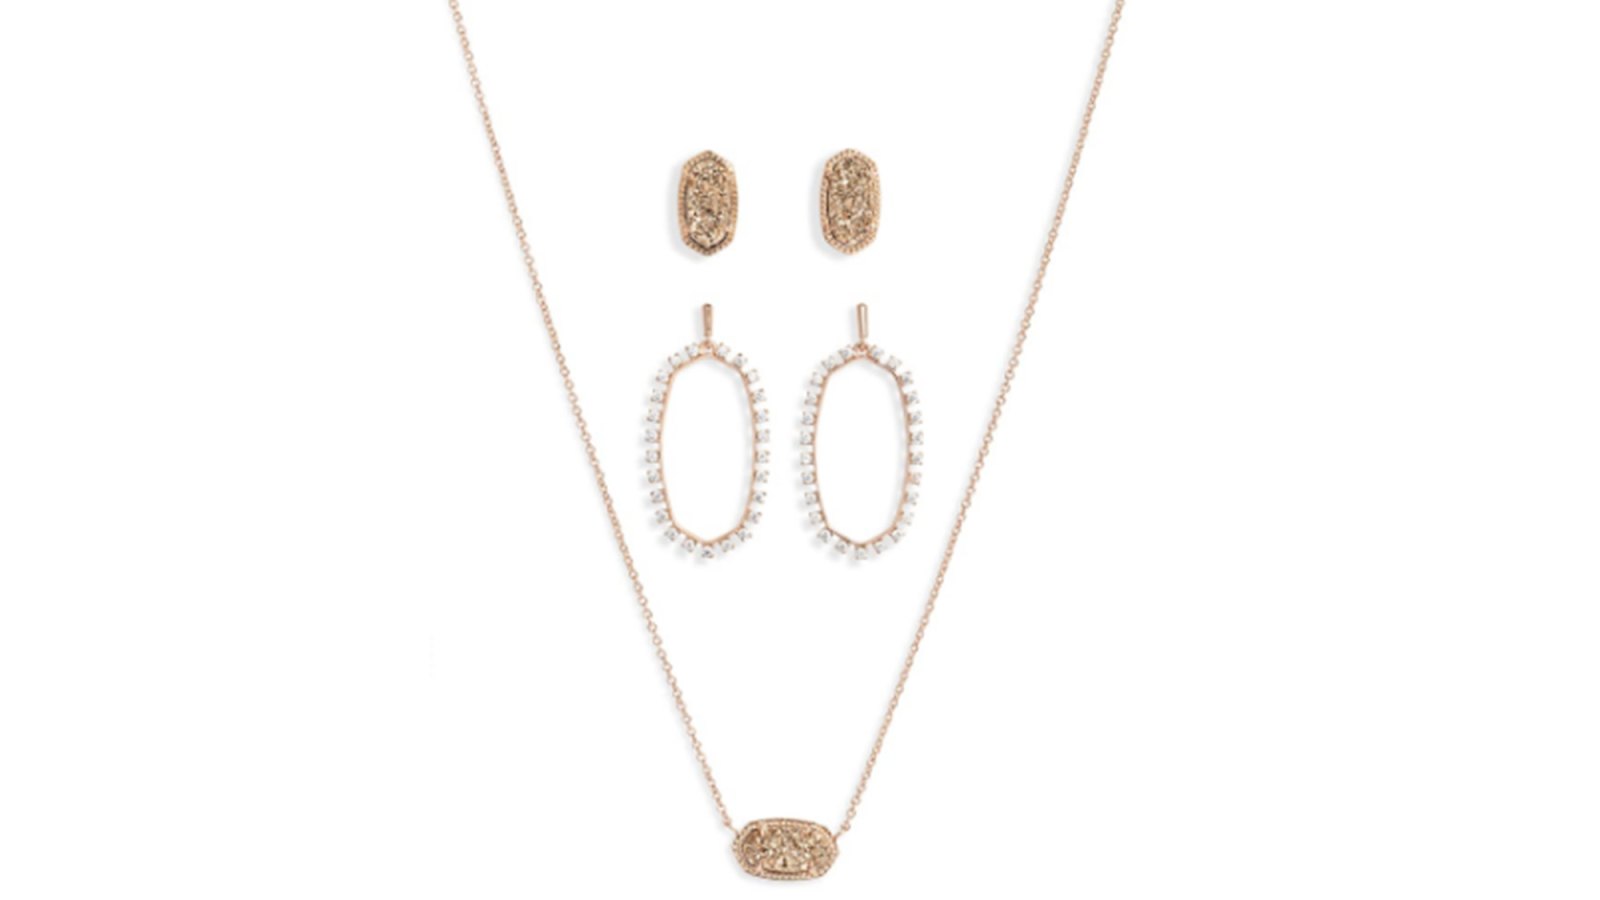 Kendra Scott 3-Piece Jewelry Gift Set